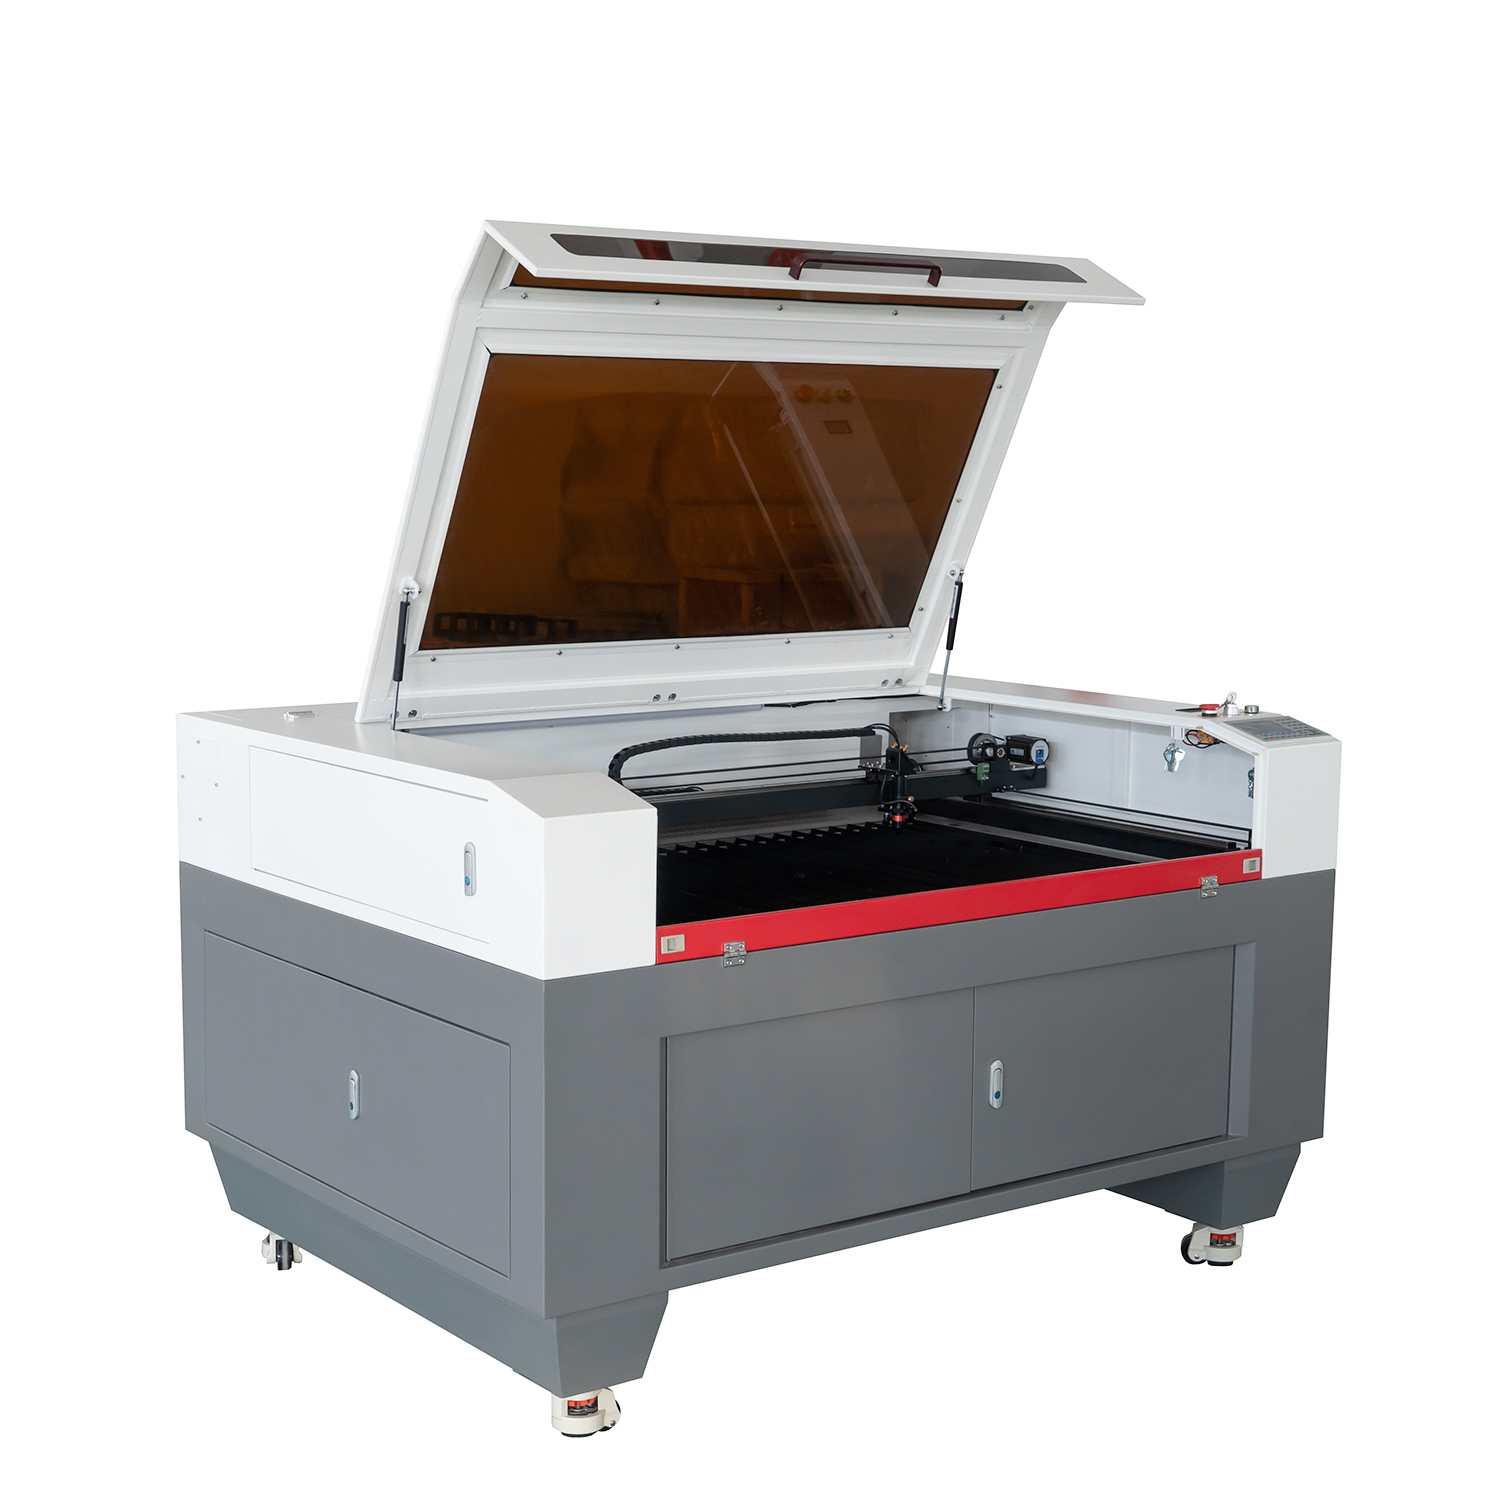 260w 300w 1310 1390 130x90cm CO2 laser engraving cutting machine laser cutter for wood acrylic leather plywood MDF die board